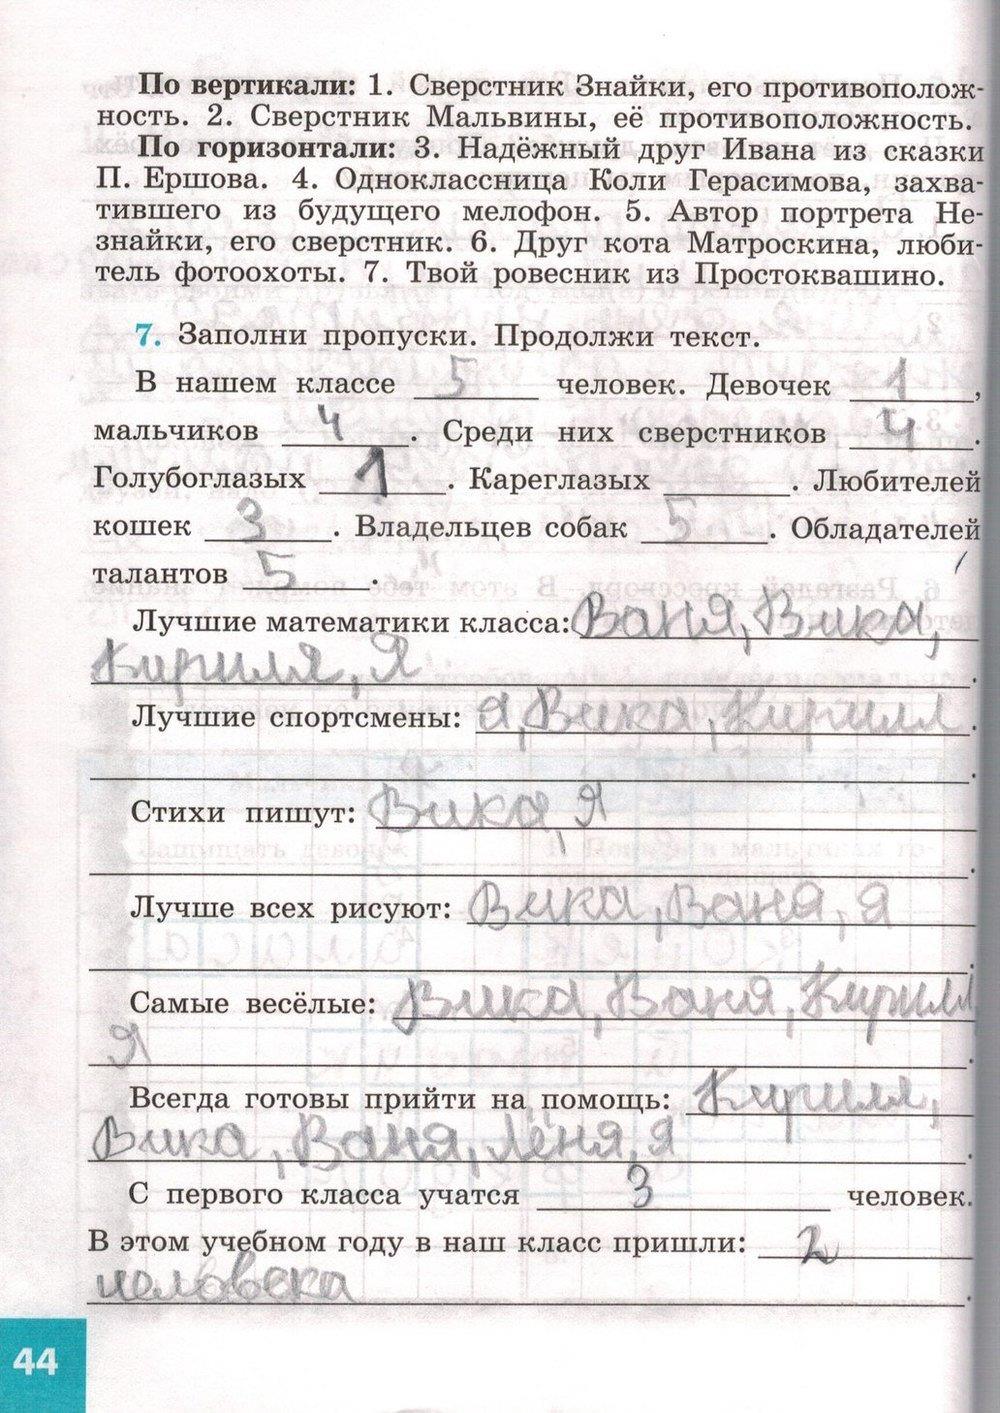 гдз 5 класс рабочая тетрадь страница 44 обществознание Иванова, Хотеенкова